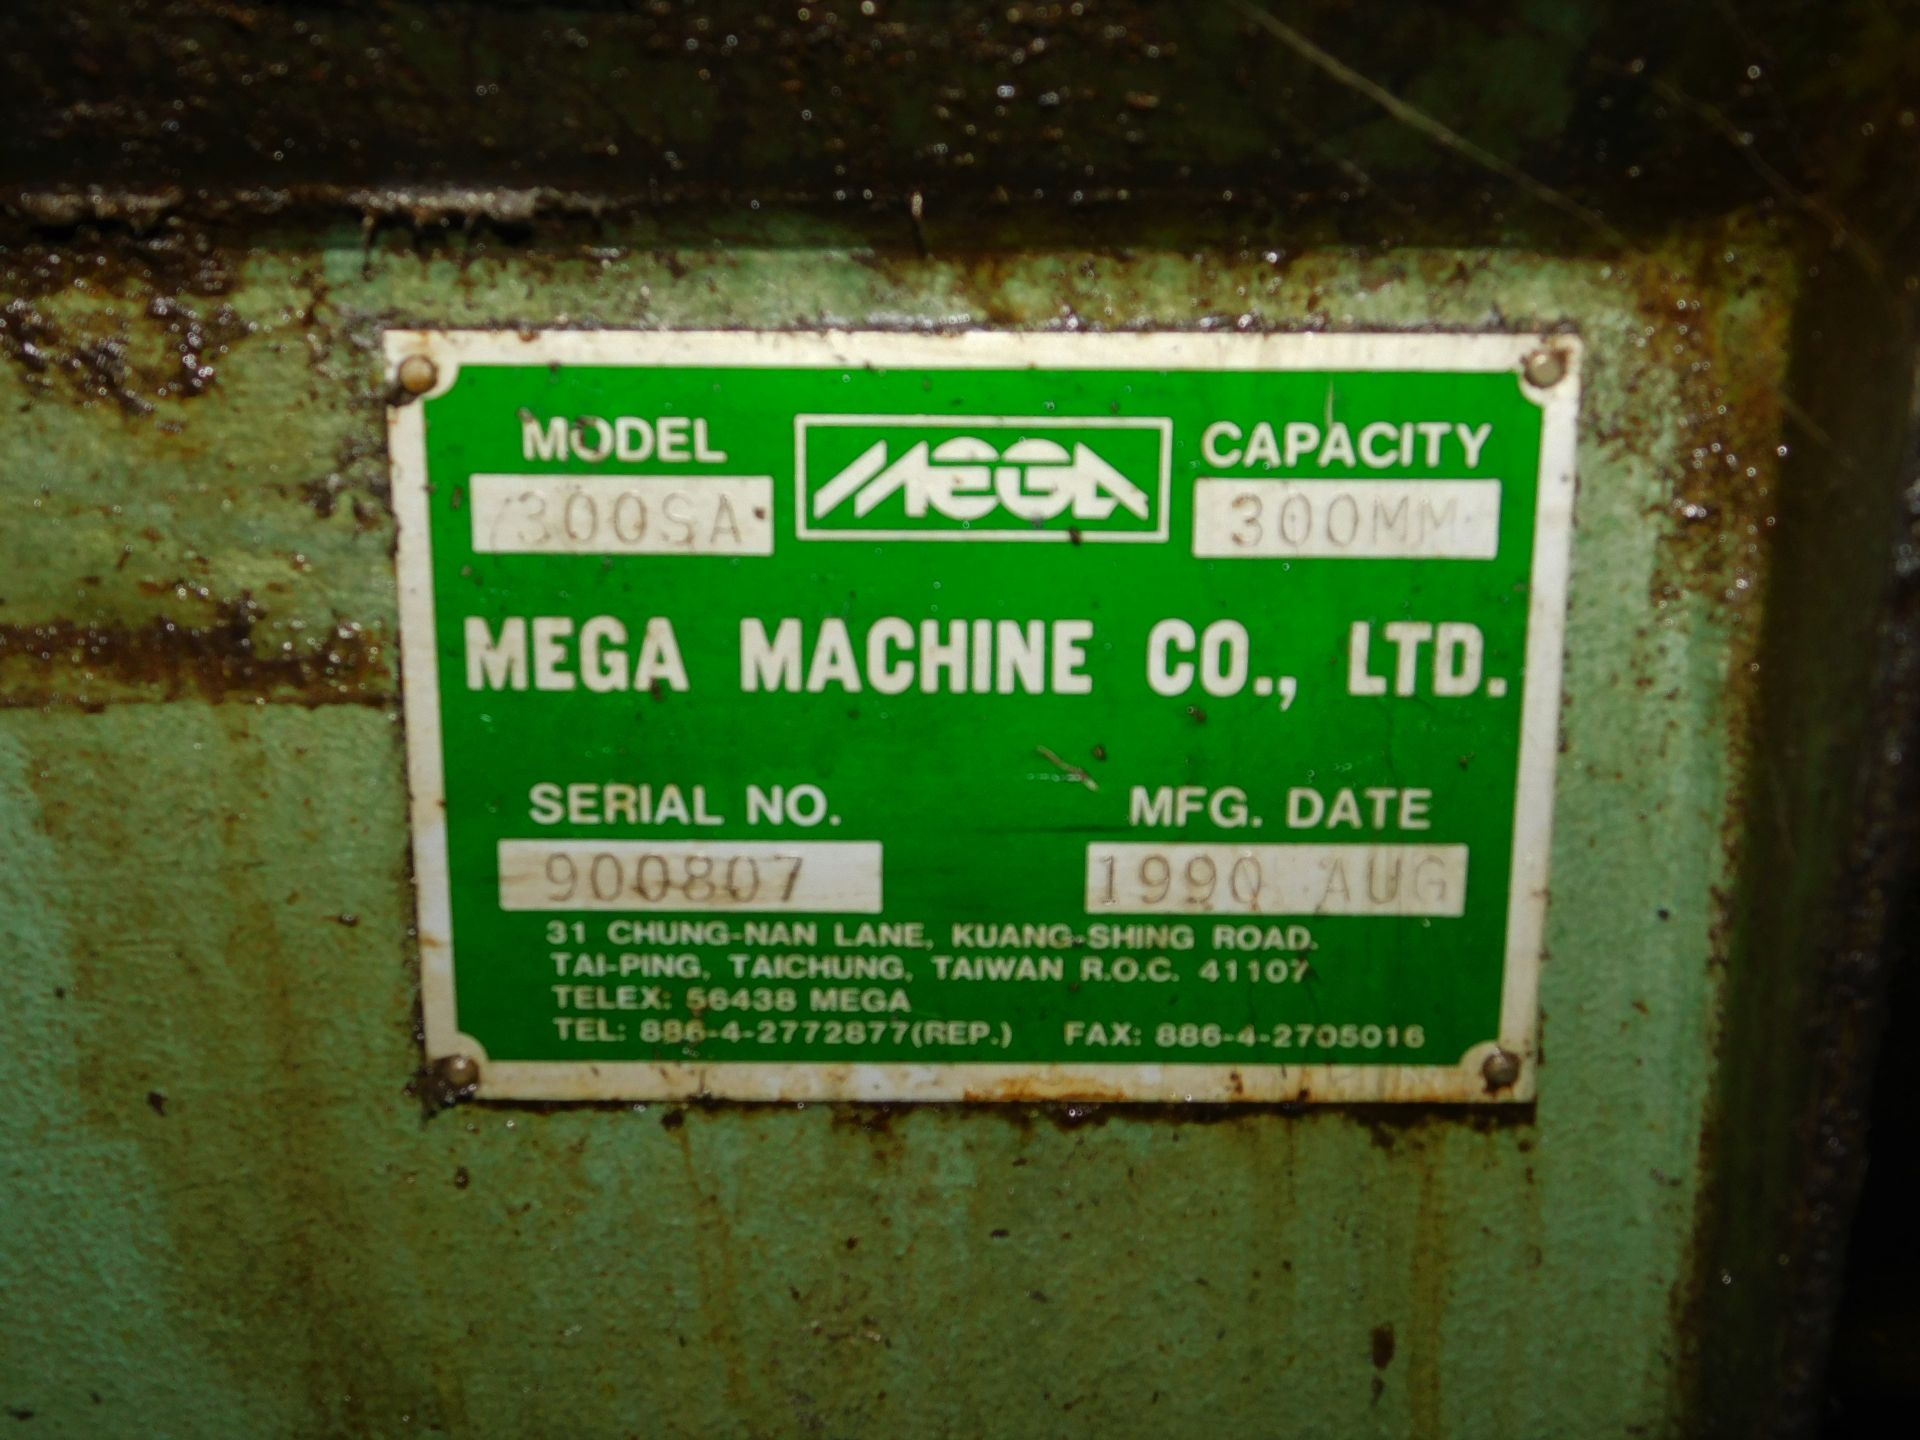 Mega Pro Saw Model BS300SA Semi-Automatic Horizontal Band Saw (1990), Serial Number 900807 ( - Bild 3 aus 4